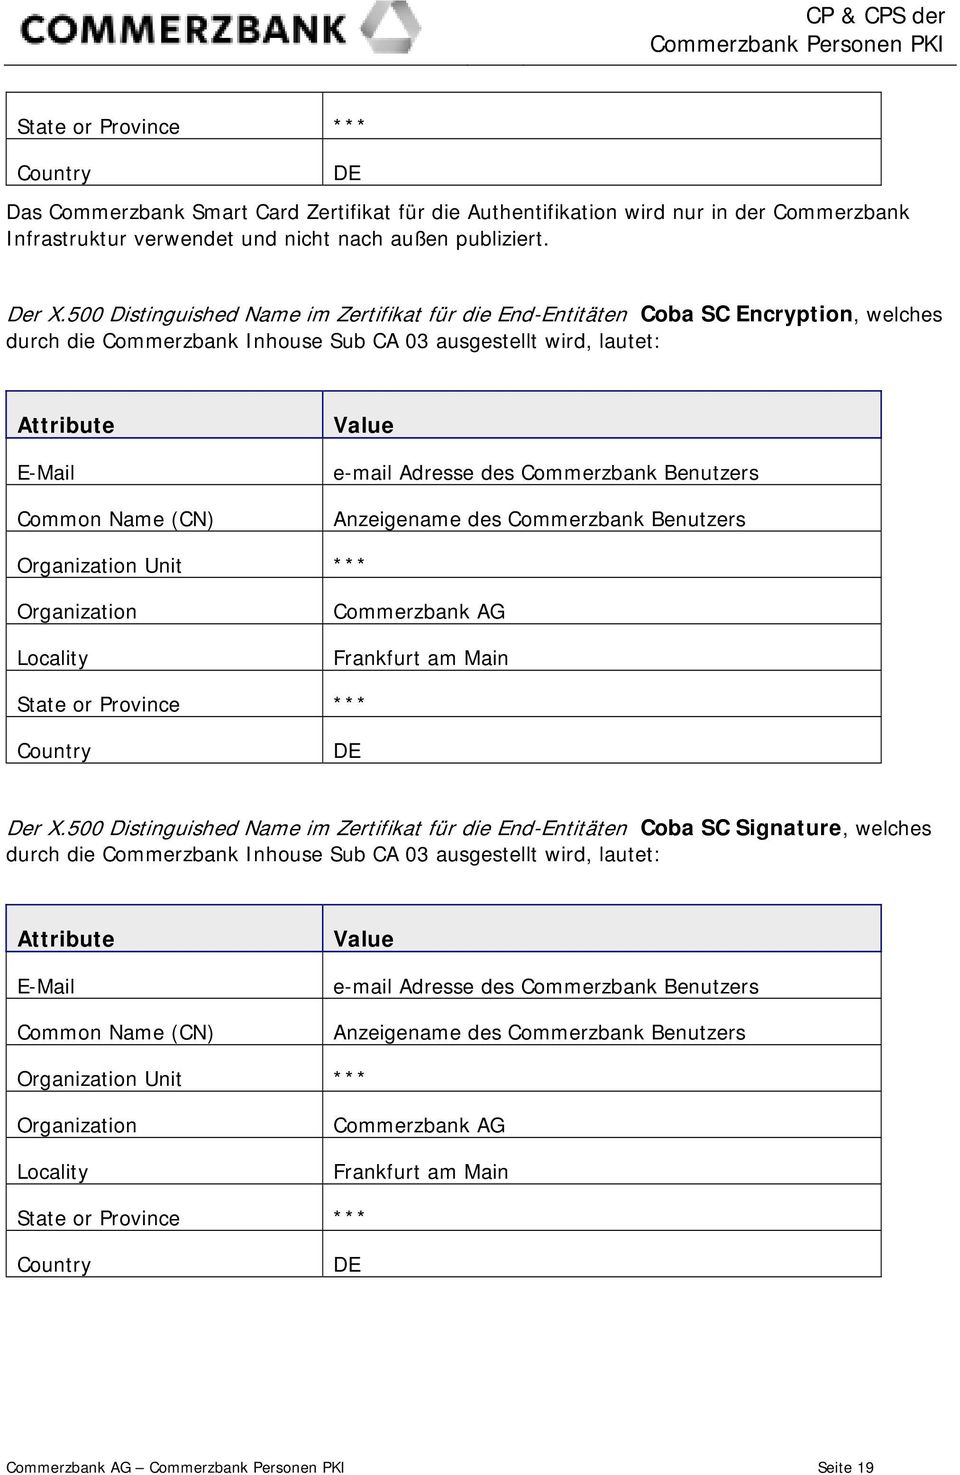 Adresse des Commerzbank Benutzers Anzeigename des Commerzbank Benutzers Organization Unit *** Organization Locality Commerzbank AG Frankfurt am Main State or Province *** Country DE Der X.